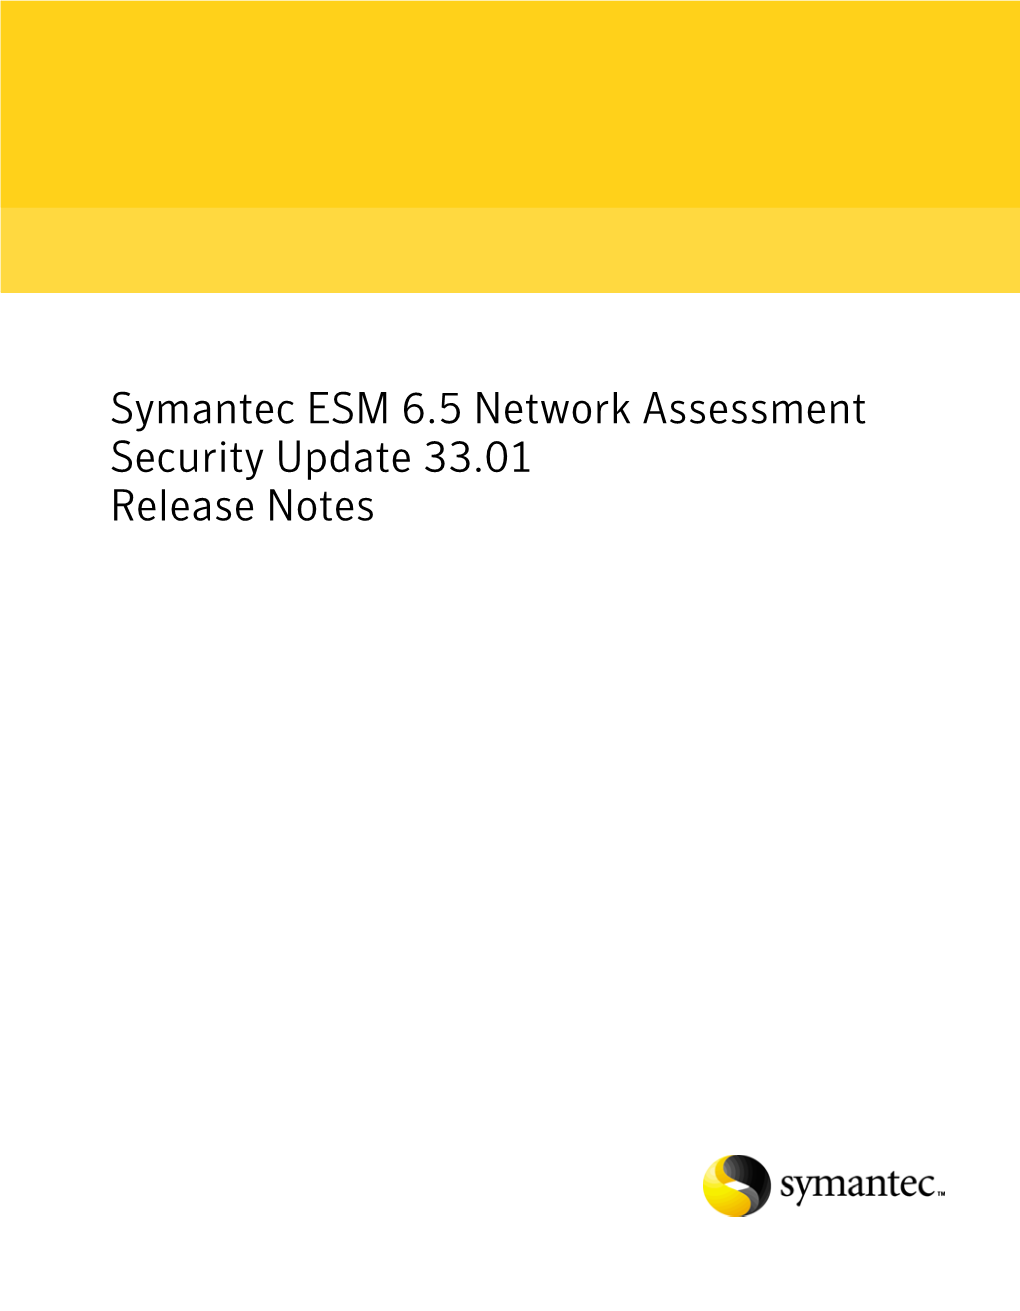 Symantec ESM 6.5 Network Assessment Security Update 33.01 Release Notes Symantec ESM 6.5 Network Assessment Security Updates Release Notes